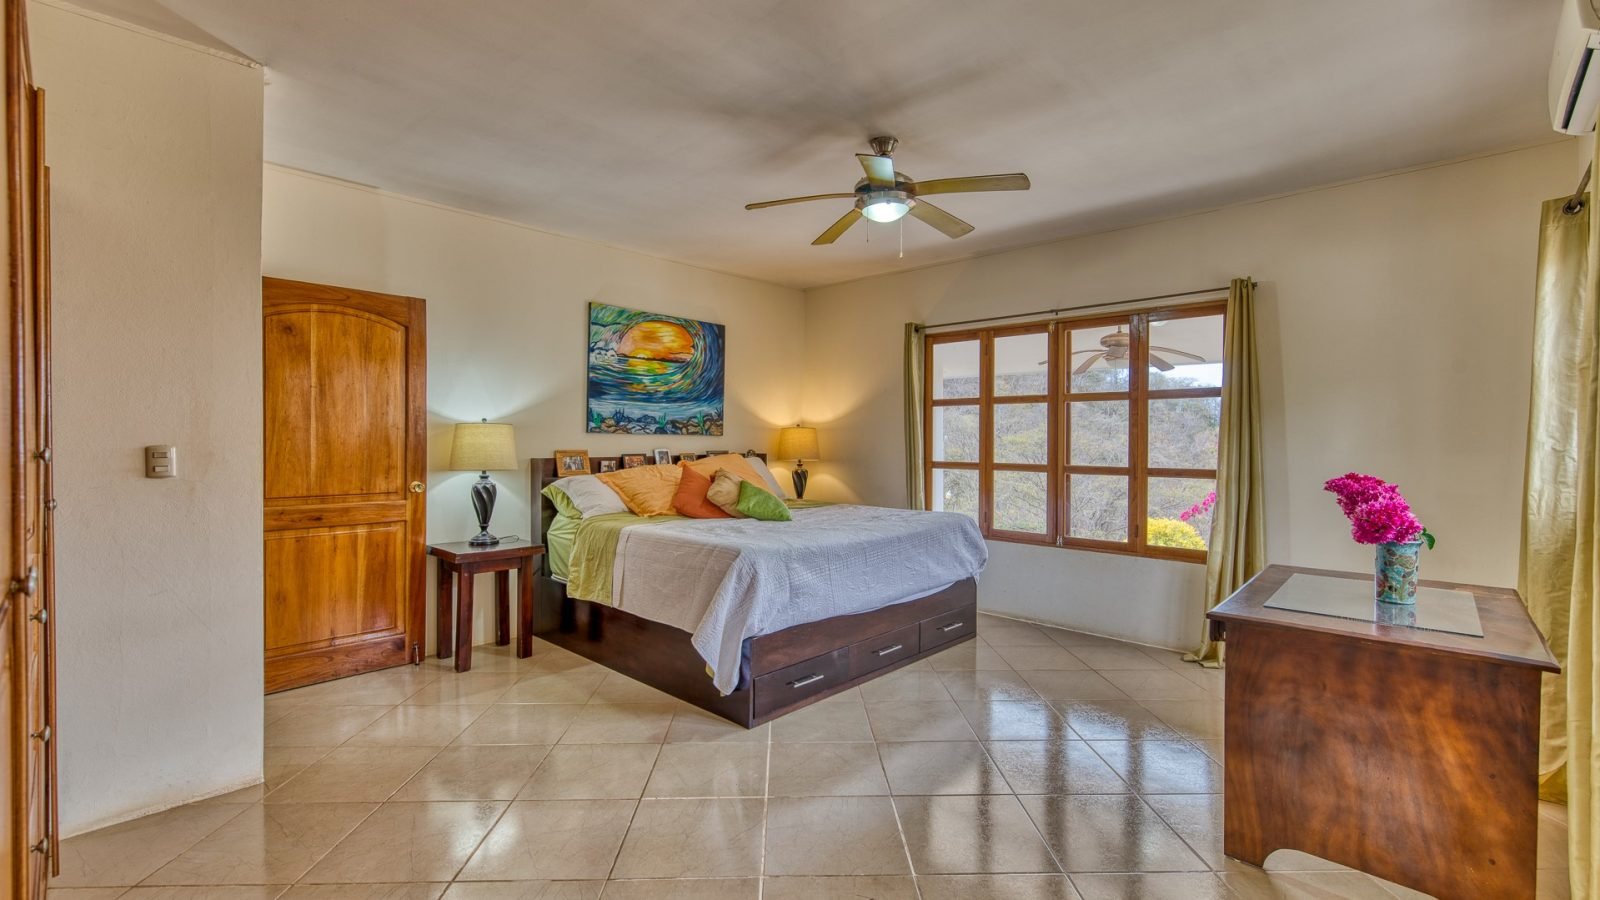 San Juan Del Sur Playa Yankee Beach Home For Sale Property Real Estate (8).jpg